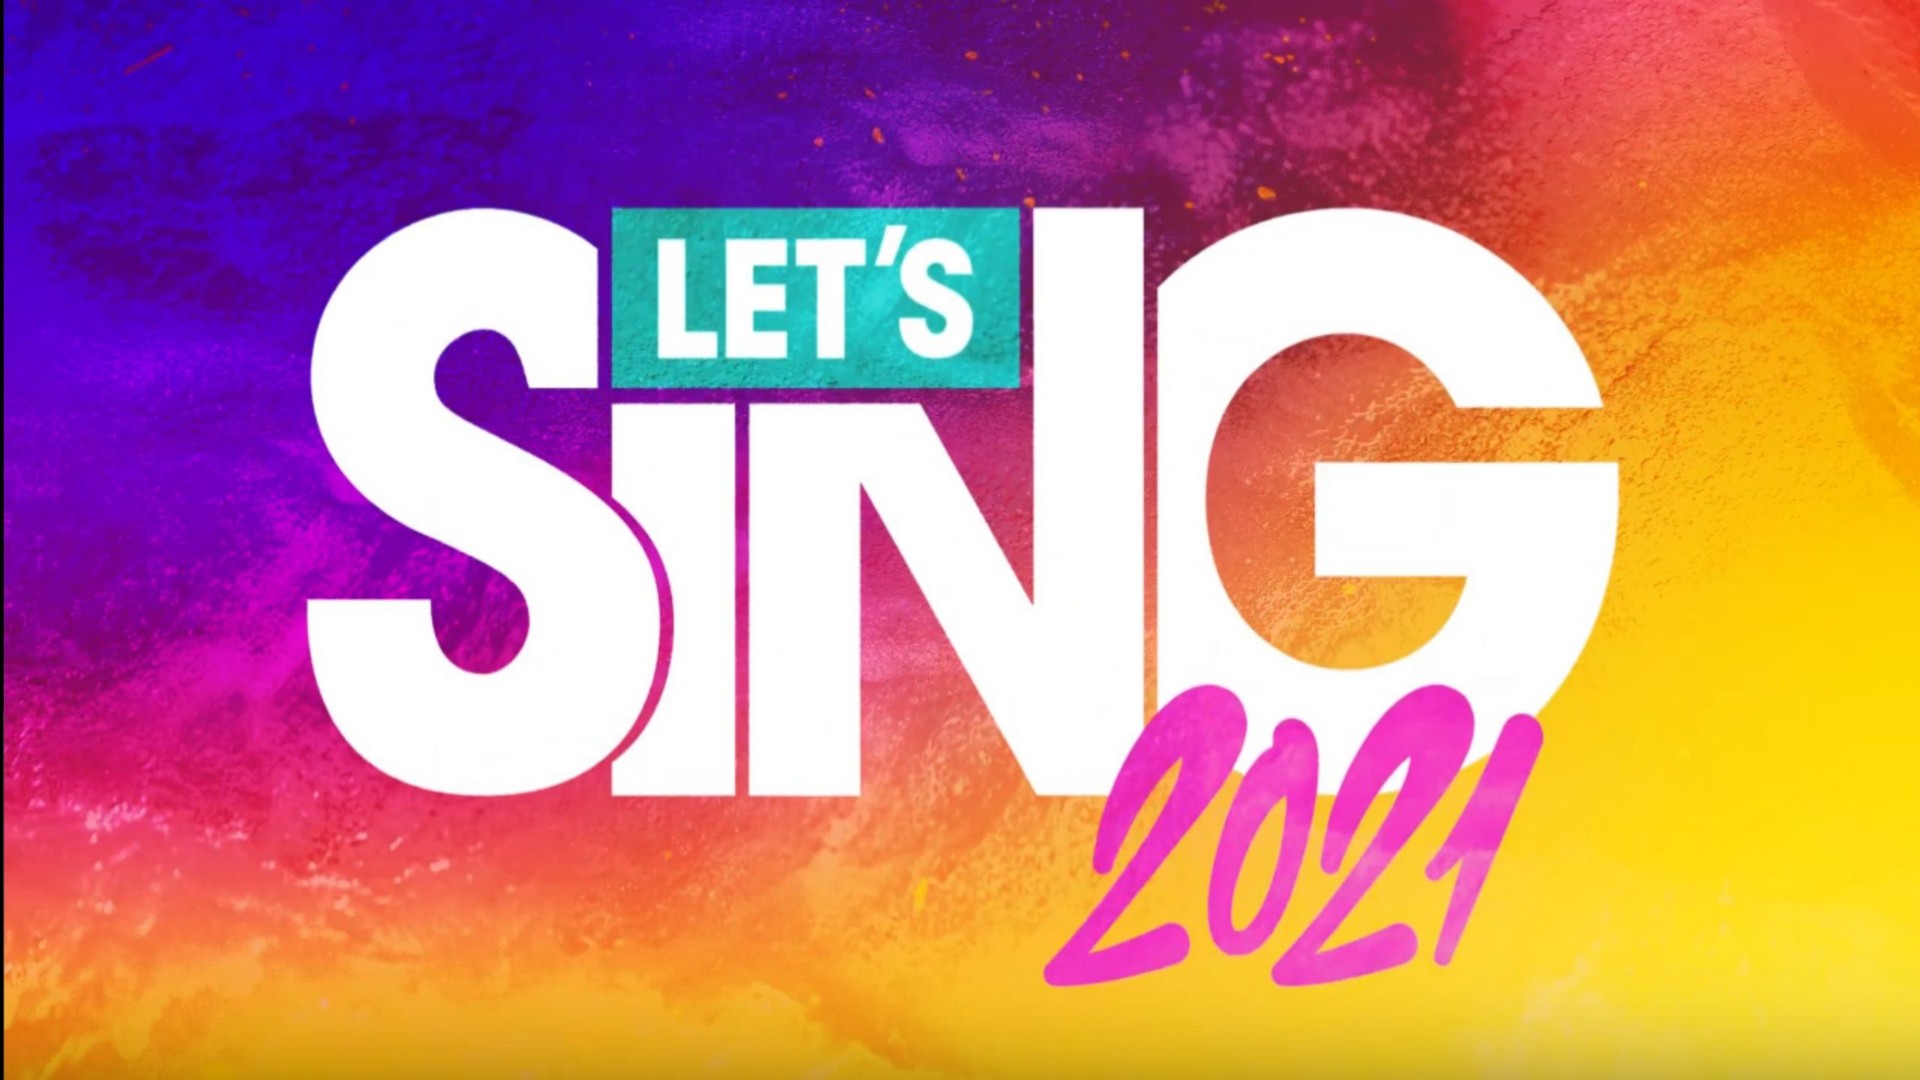 Let's Sing 2024 - PS4 - Compra jogos online na